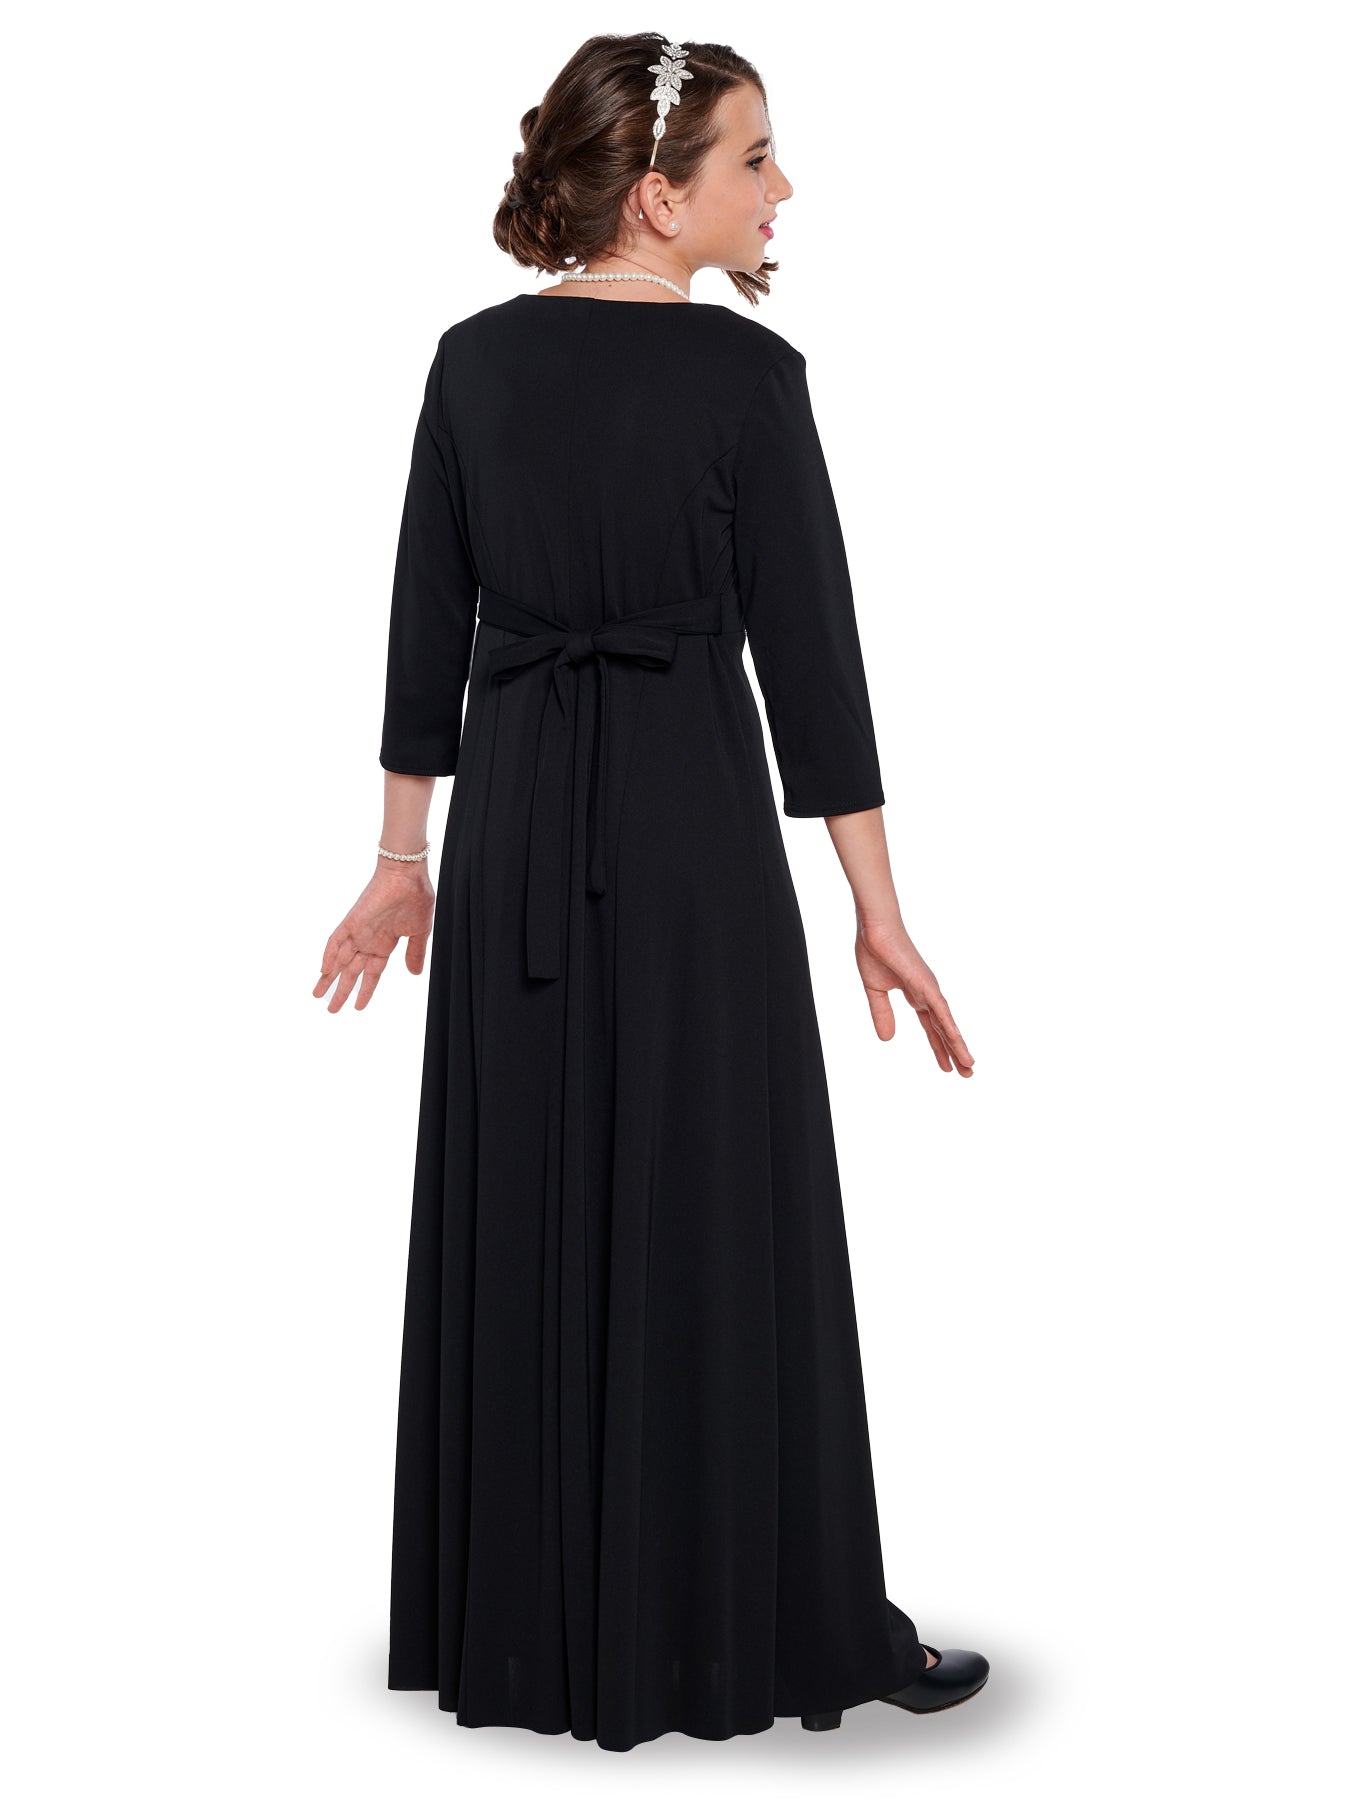 NATALIE (Style #125Y) - Scoop Neckline 3/4 Sleeve Dress - Youth